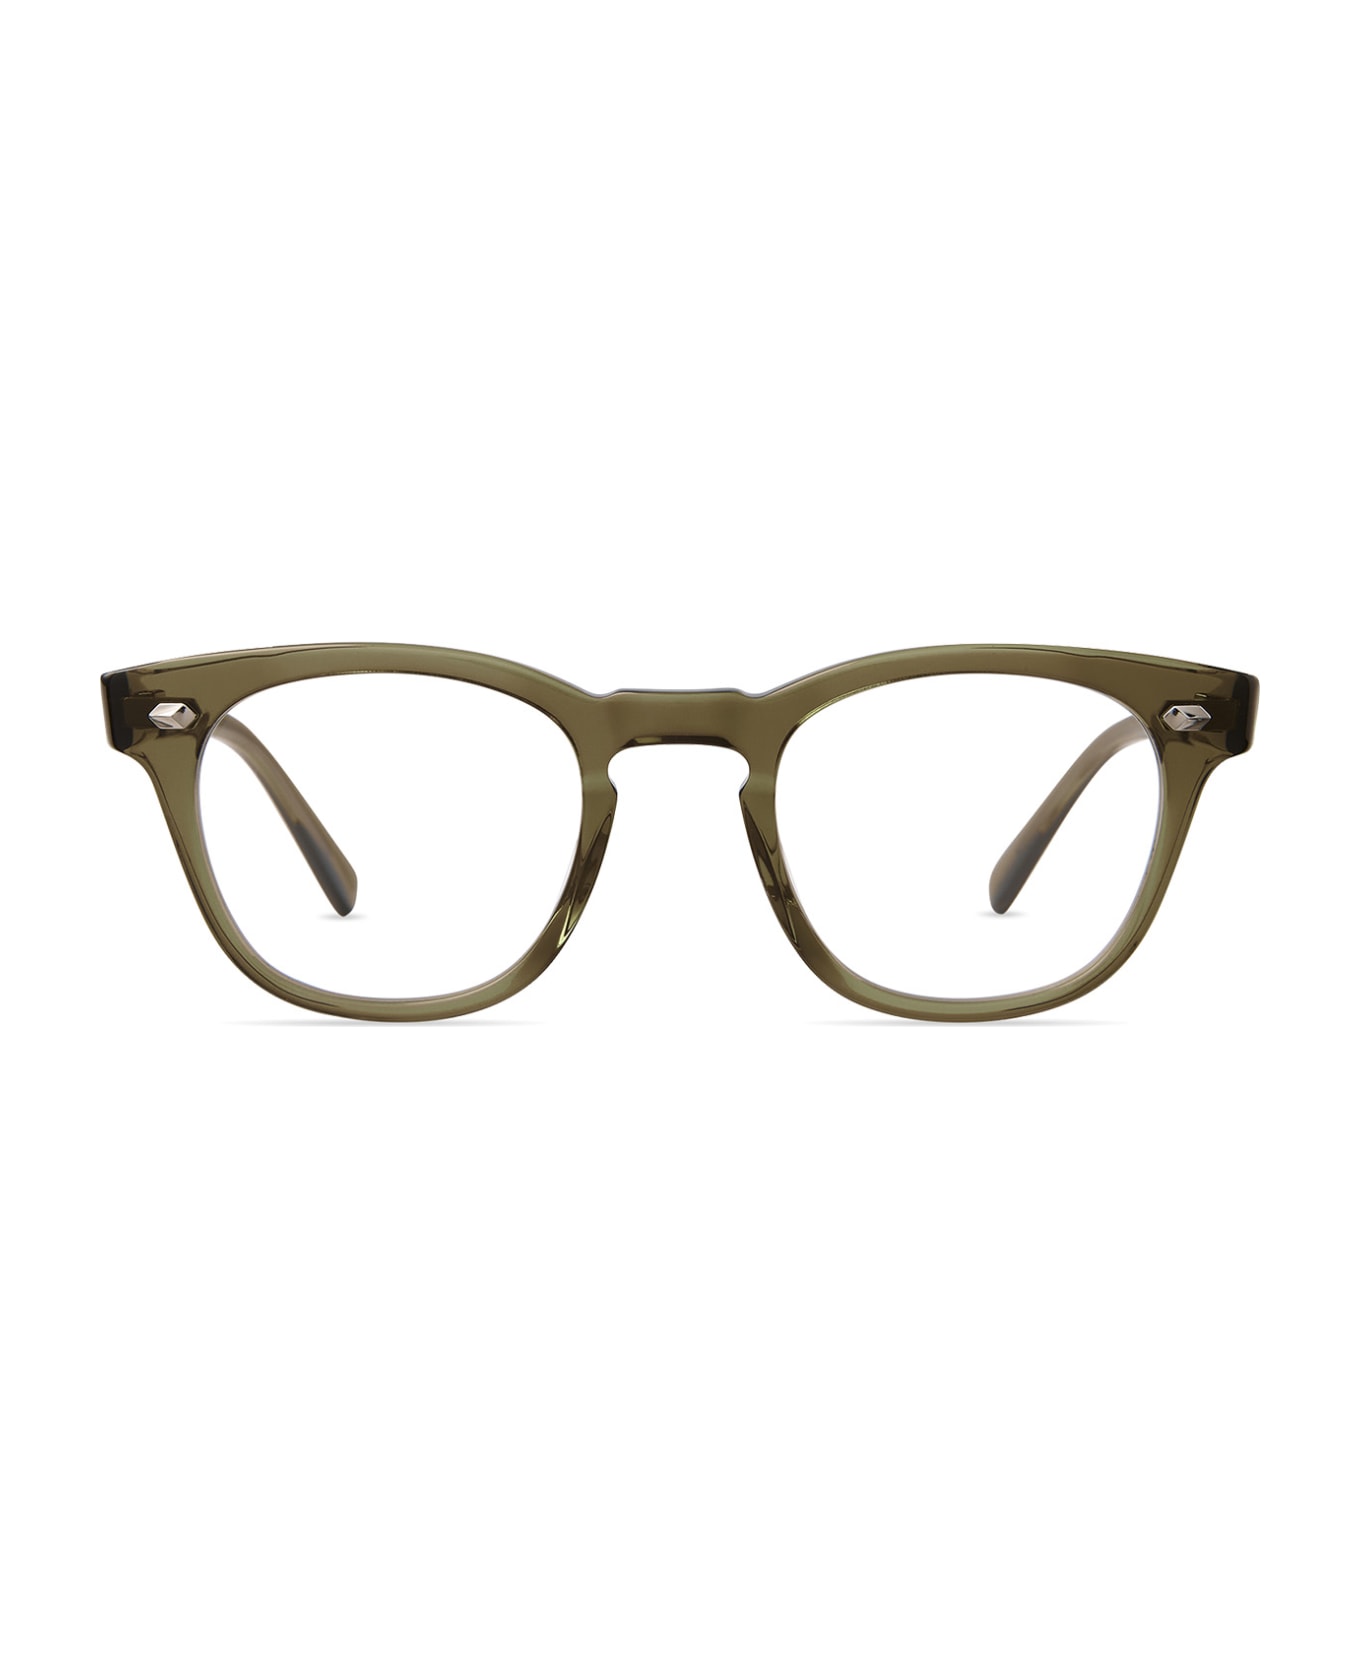 Mr. Leight Hanalei C Limu-platinum Glasses - Limu-Platinum アイウェア